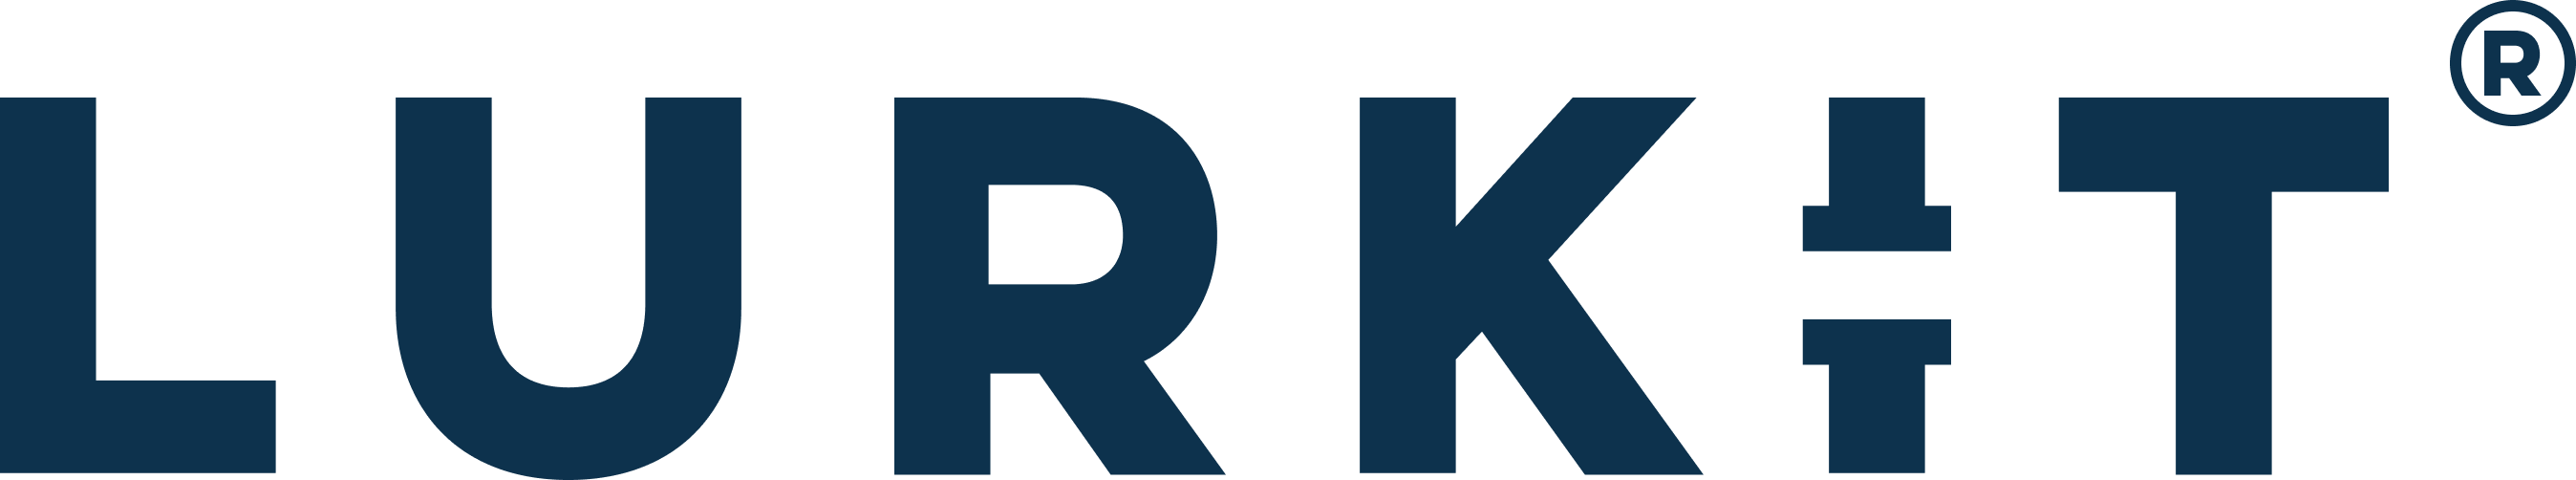 Lurkit-logo-default-navy